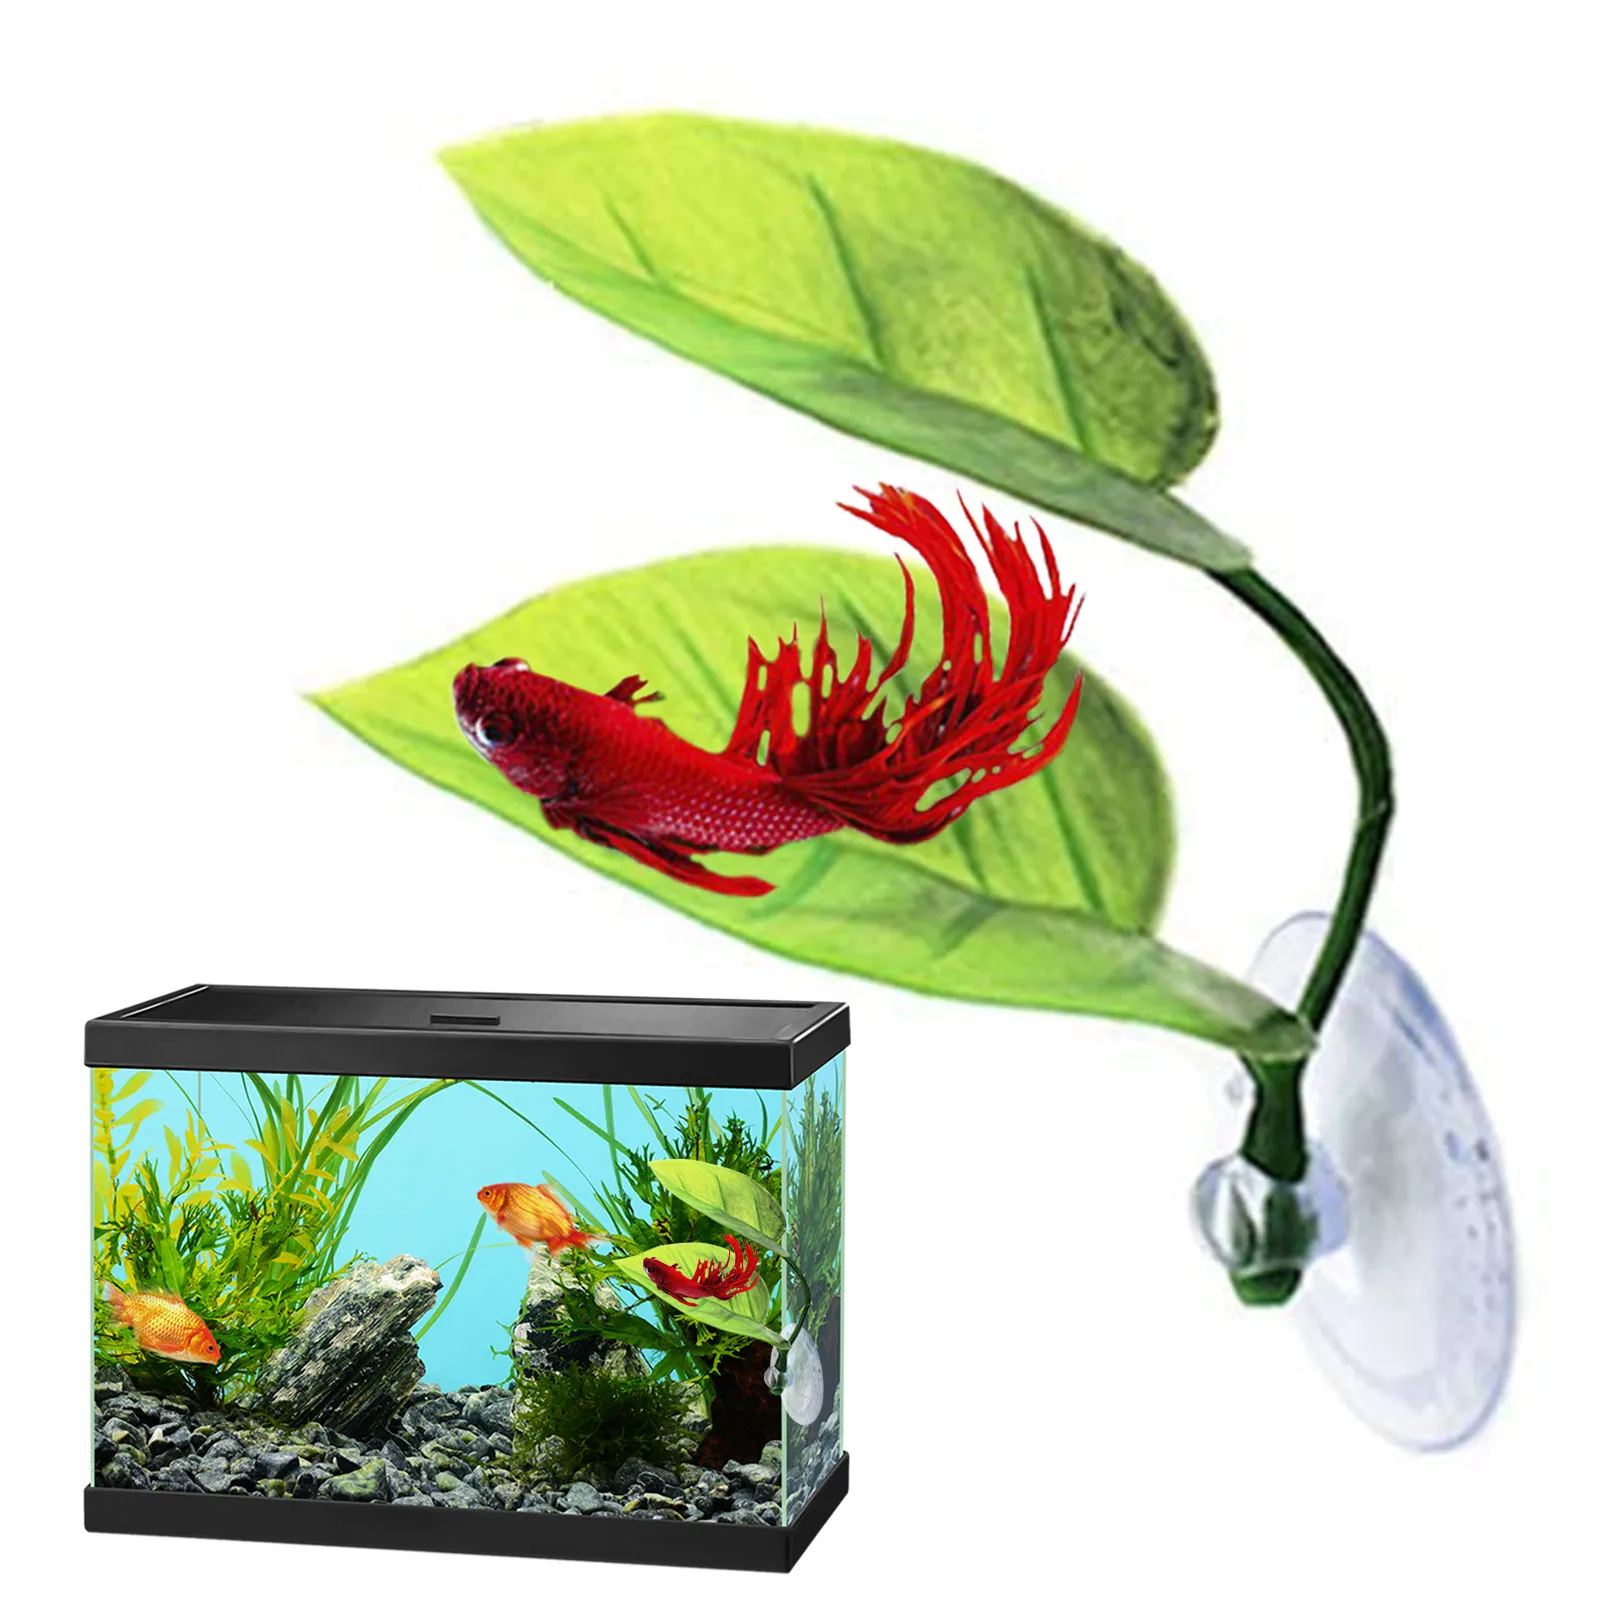 Betta Fish Leaf Pad Aquarium Pet Supplies Decoration Simulation Water Grass Fish Tank Landscaping Artificial Simulation